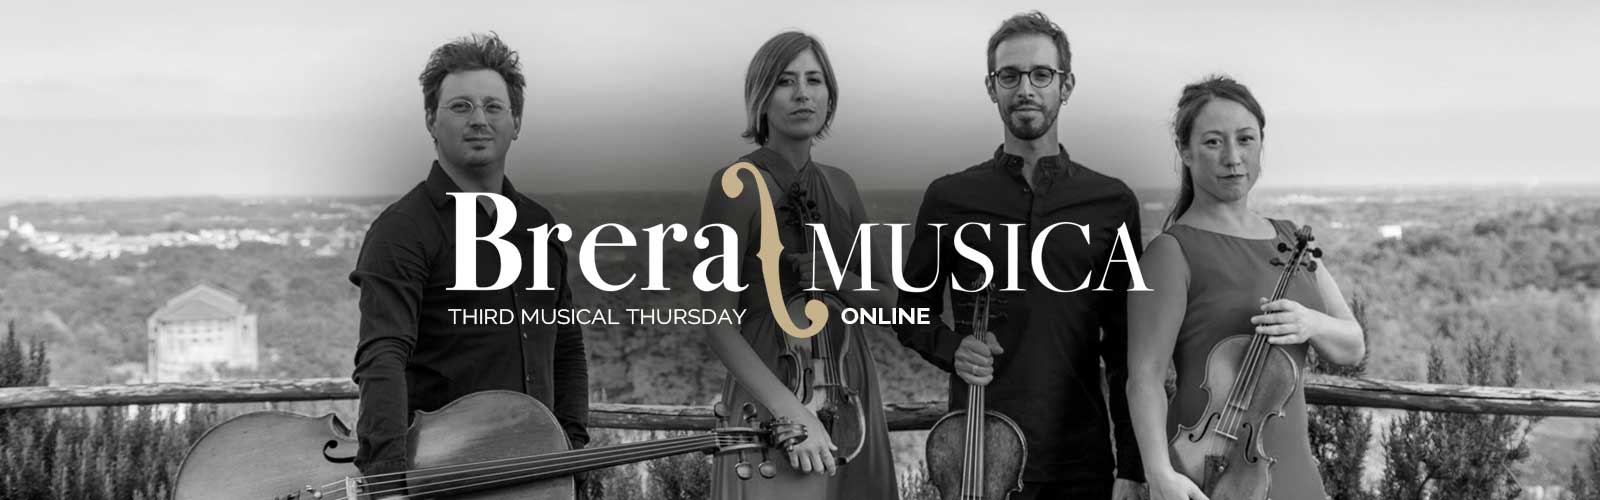 Brera/Musica online<br>Third Musical Thursday